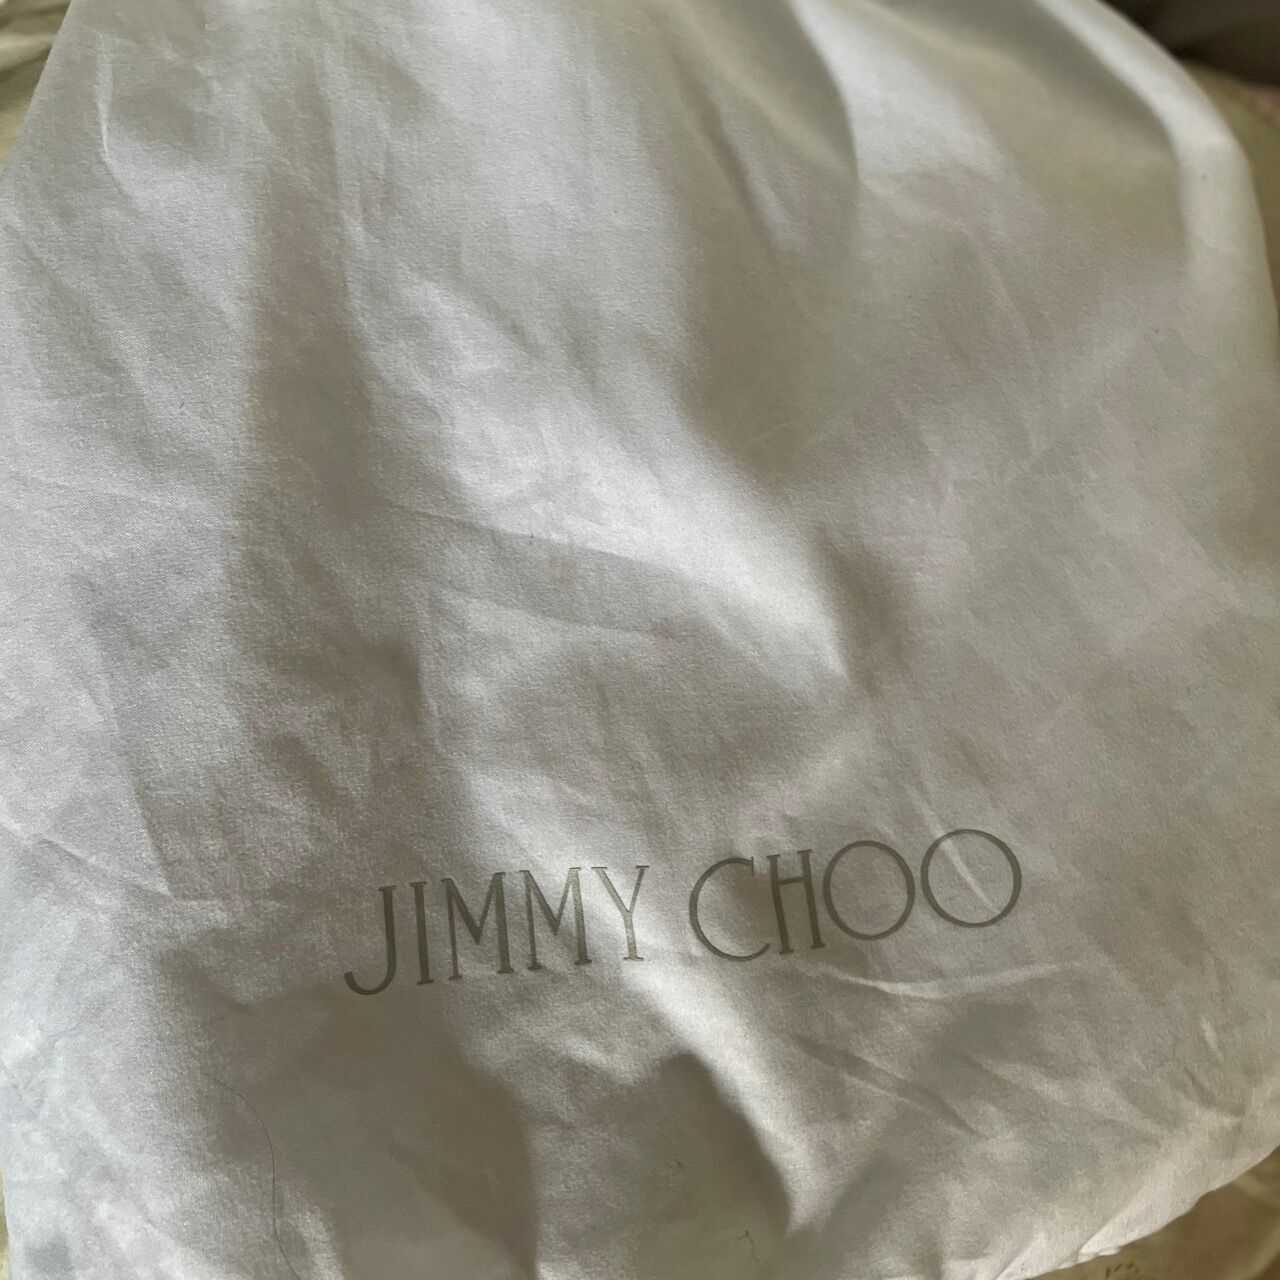 Jimmy Choo Women's Black Minny 85 